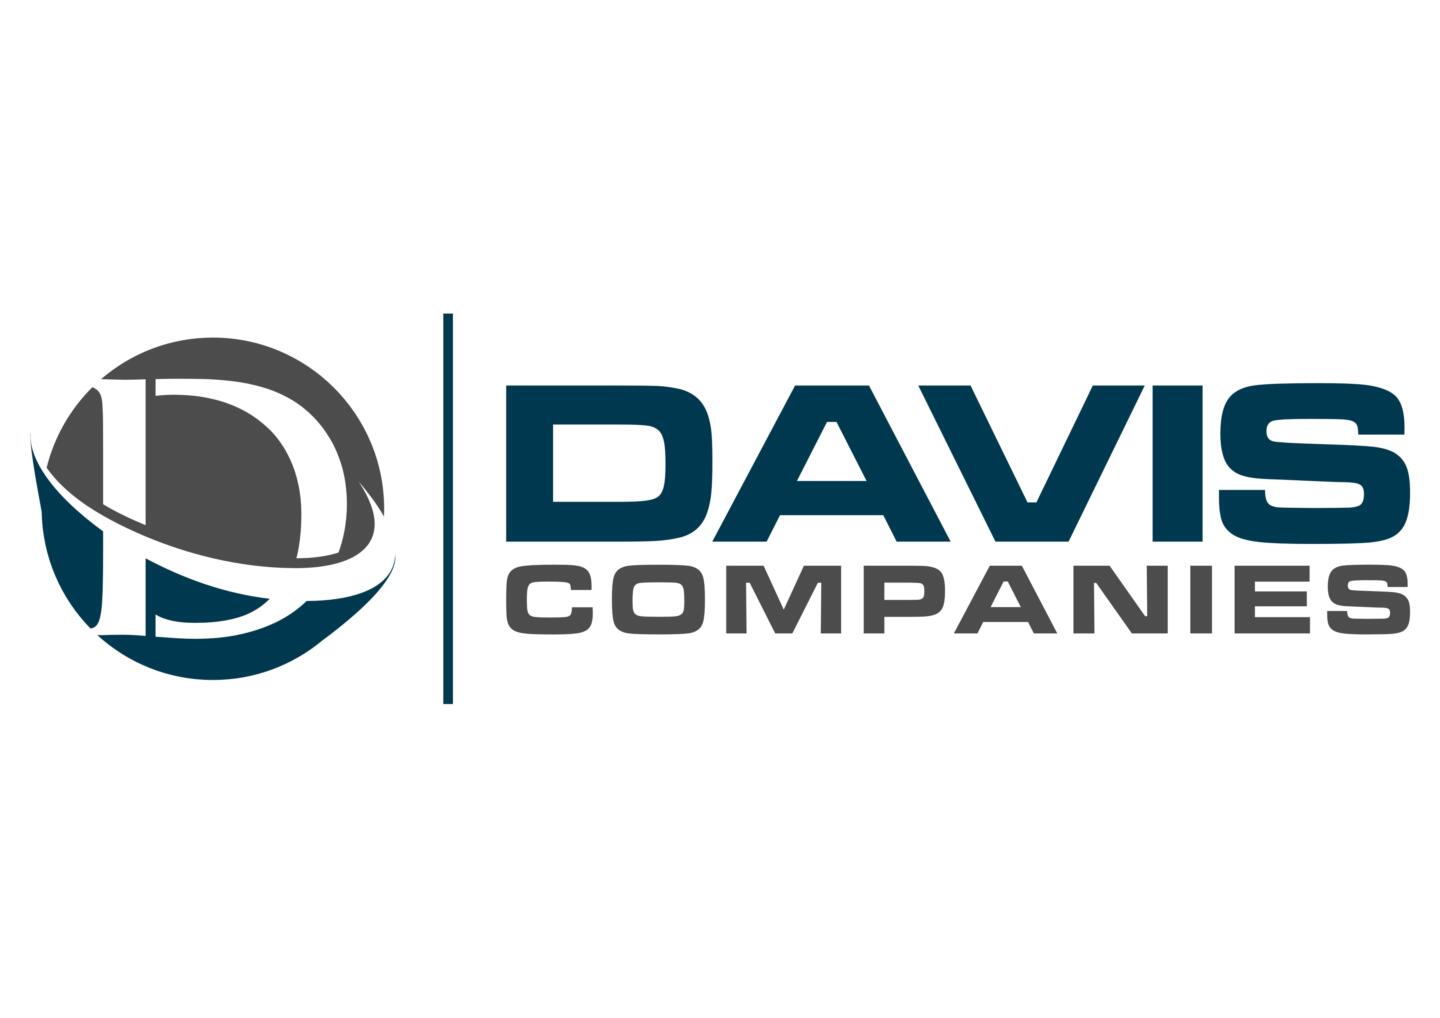 DAVIS logo